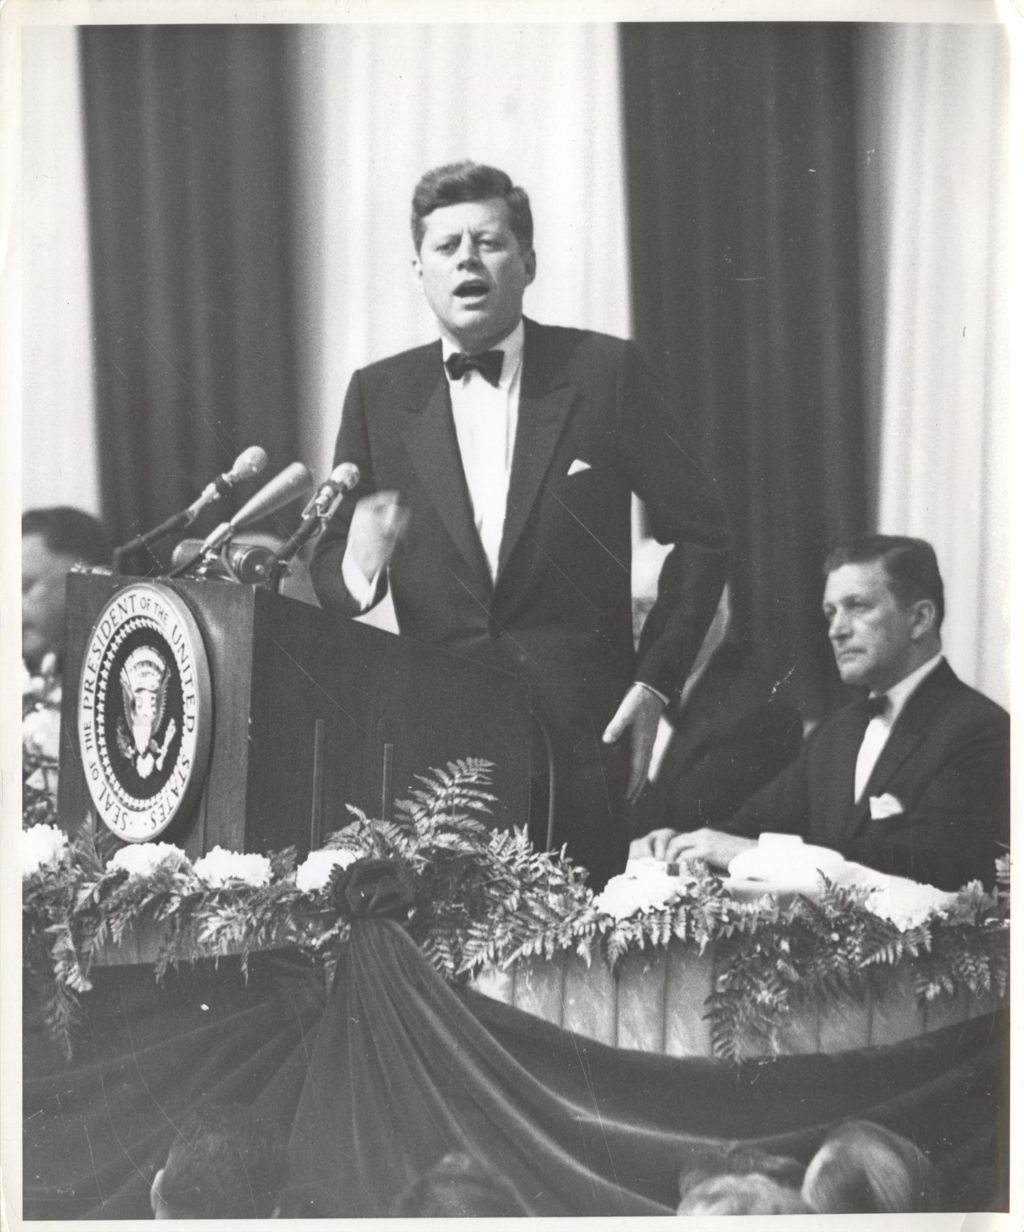 Miniature of President John F. Kennedy speaking at Democratic fundraising dinner